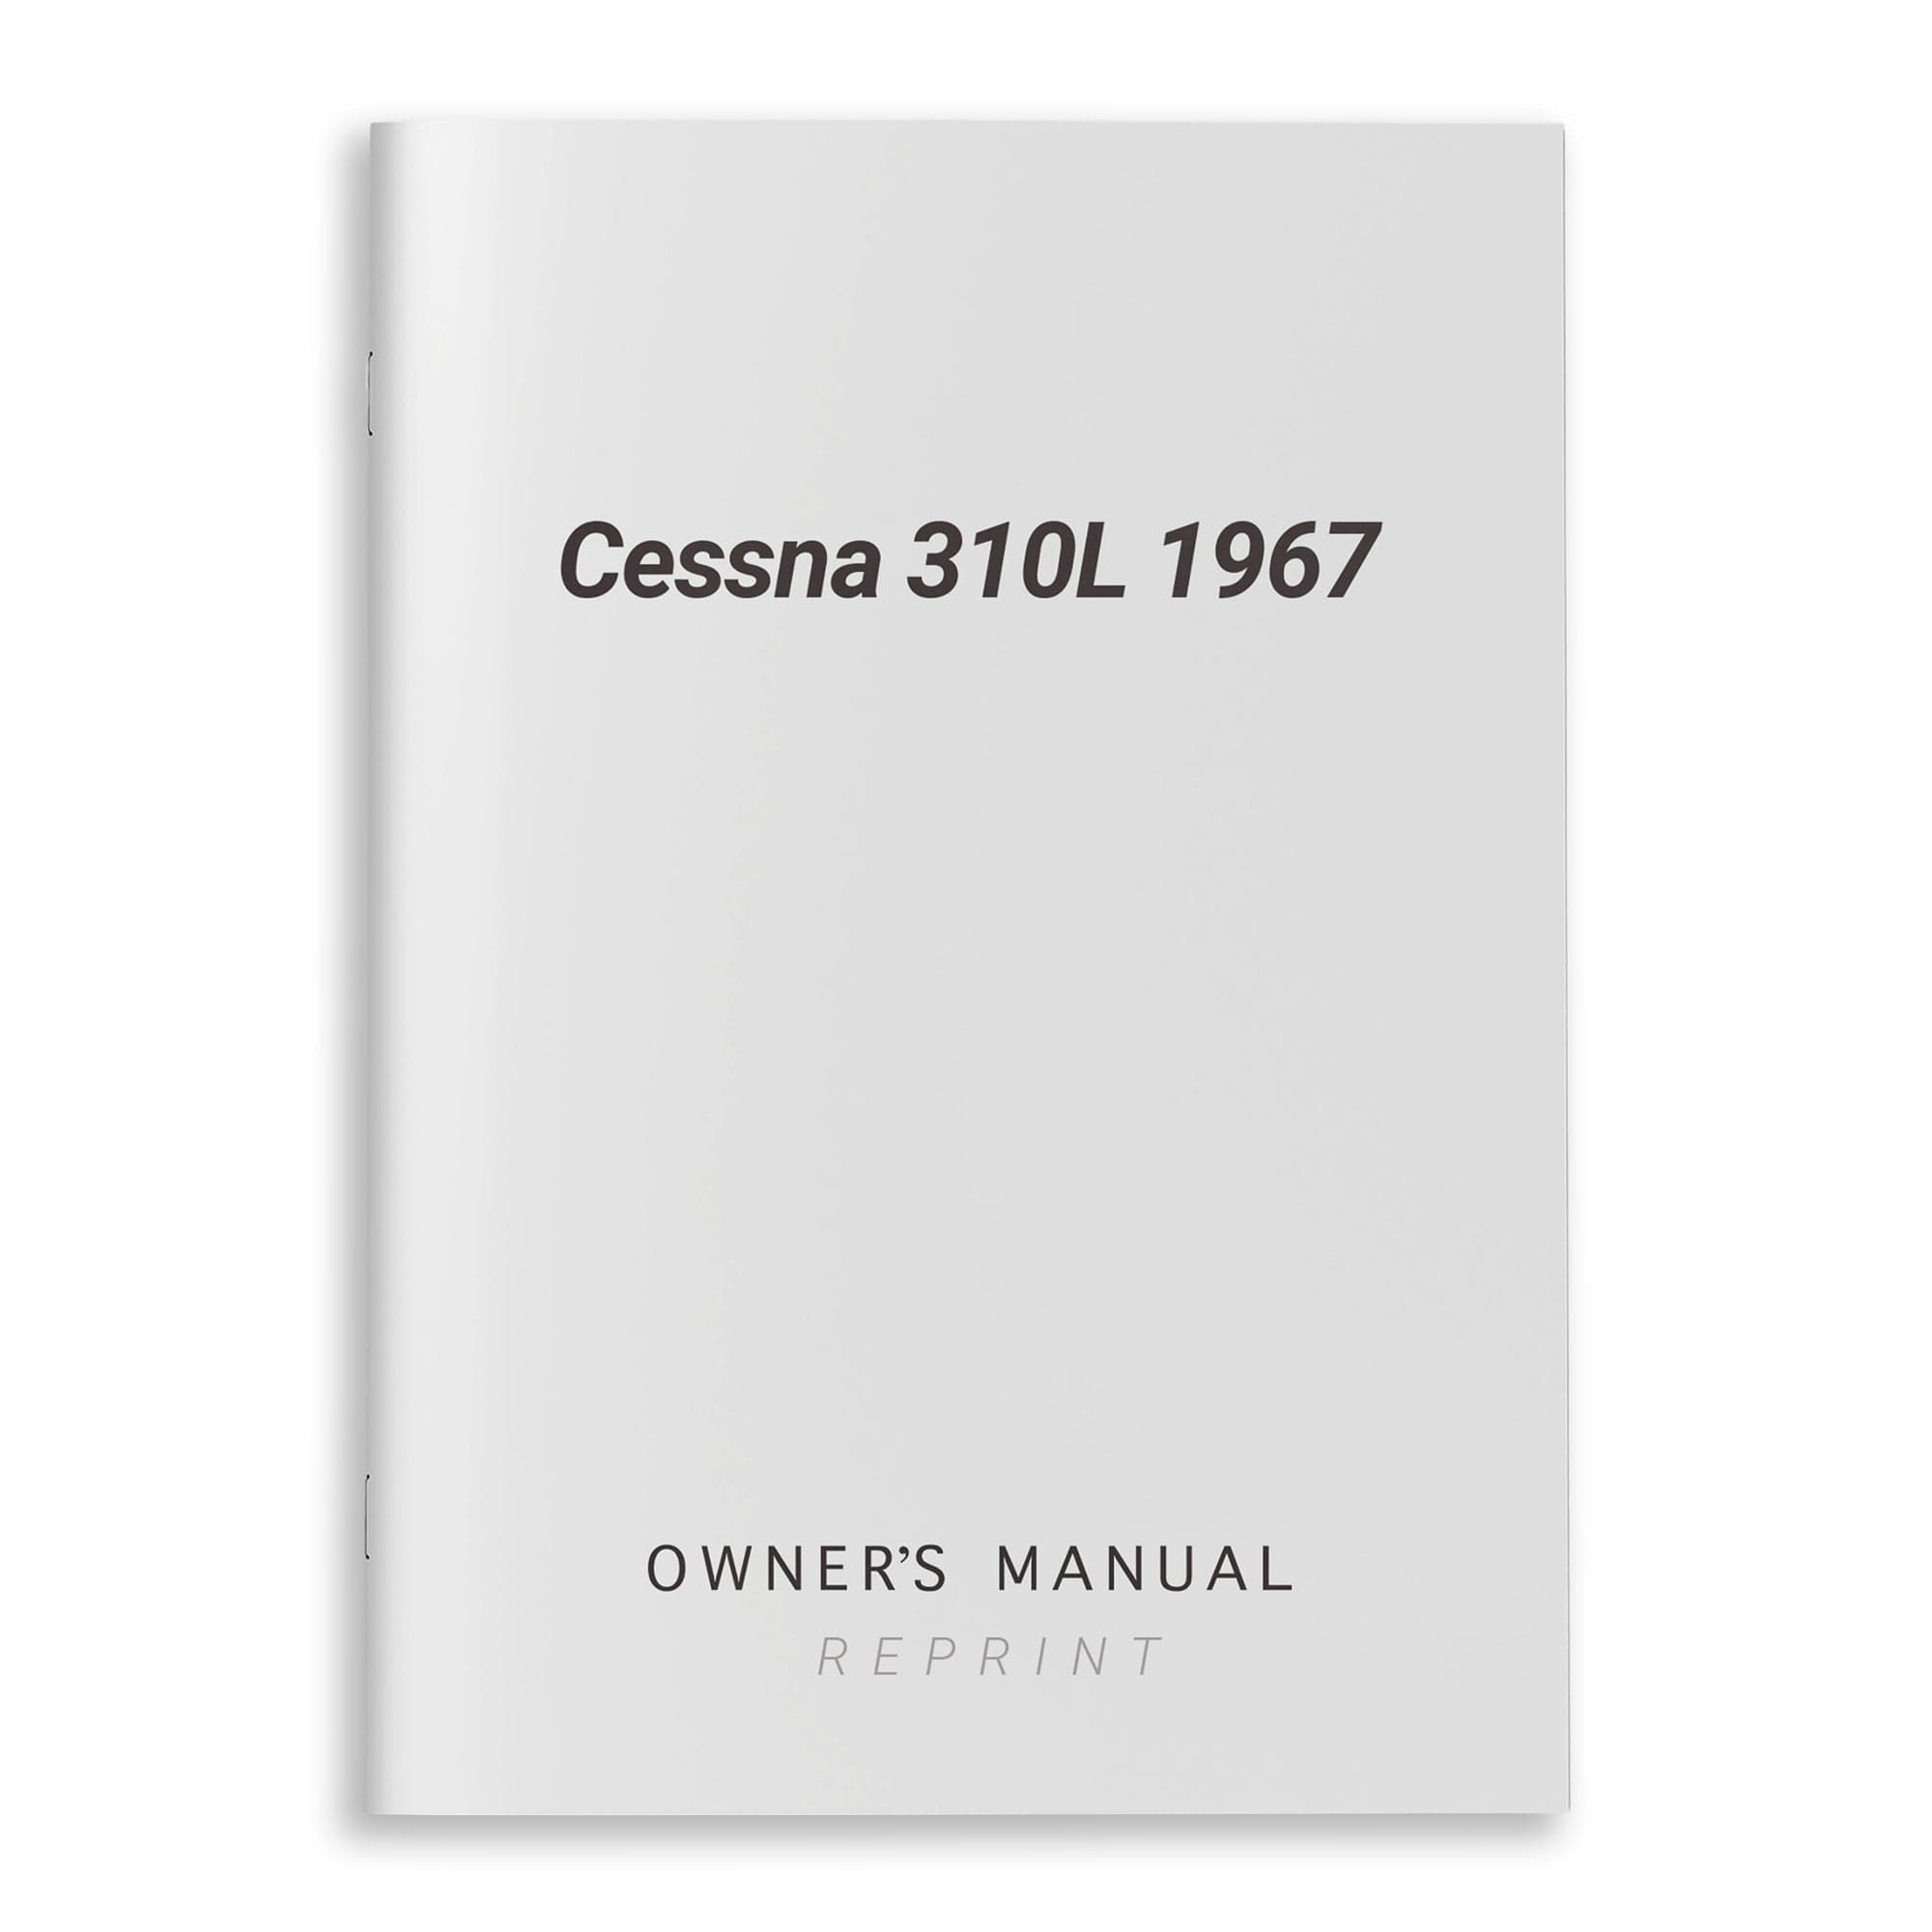 Cessna 310L 1967 Owner's Manual